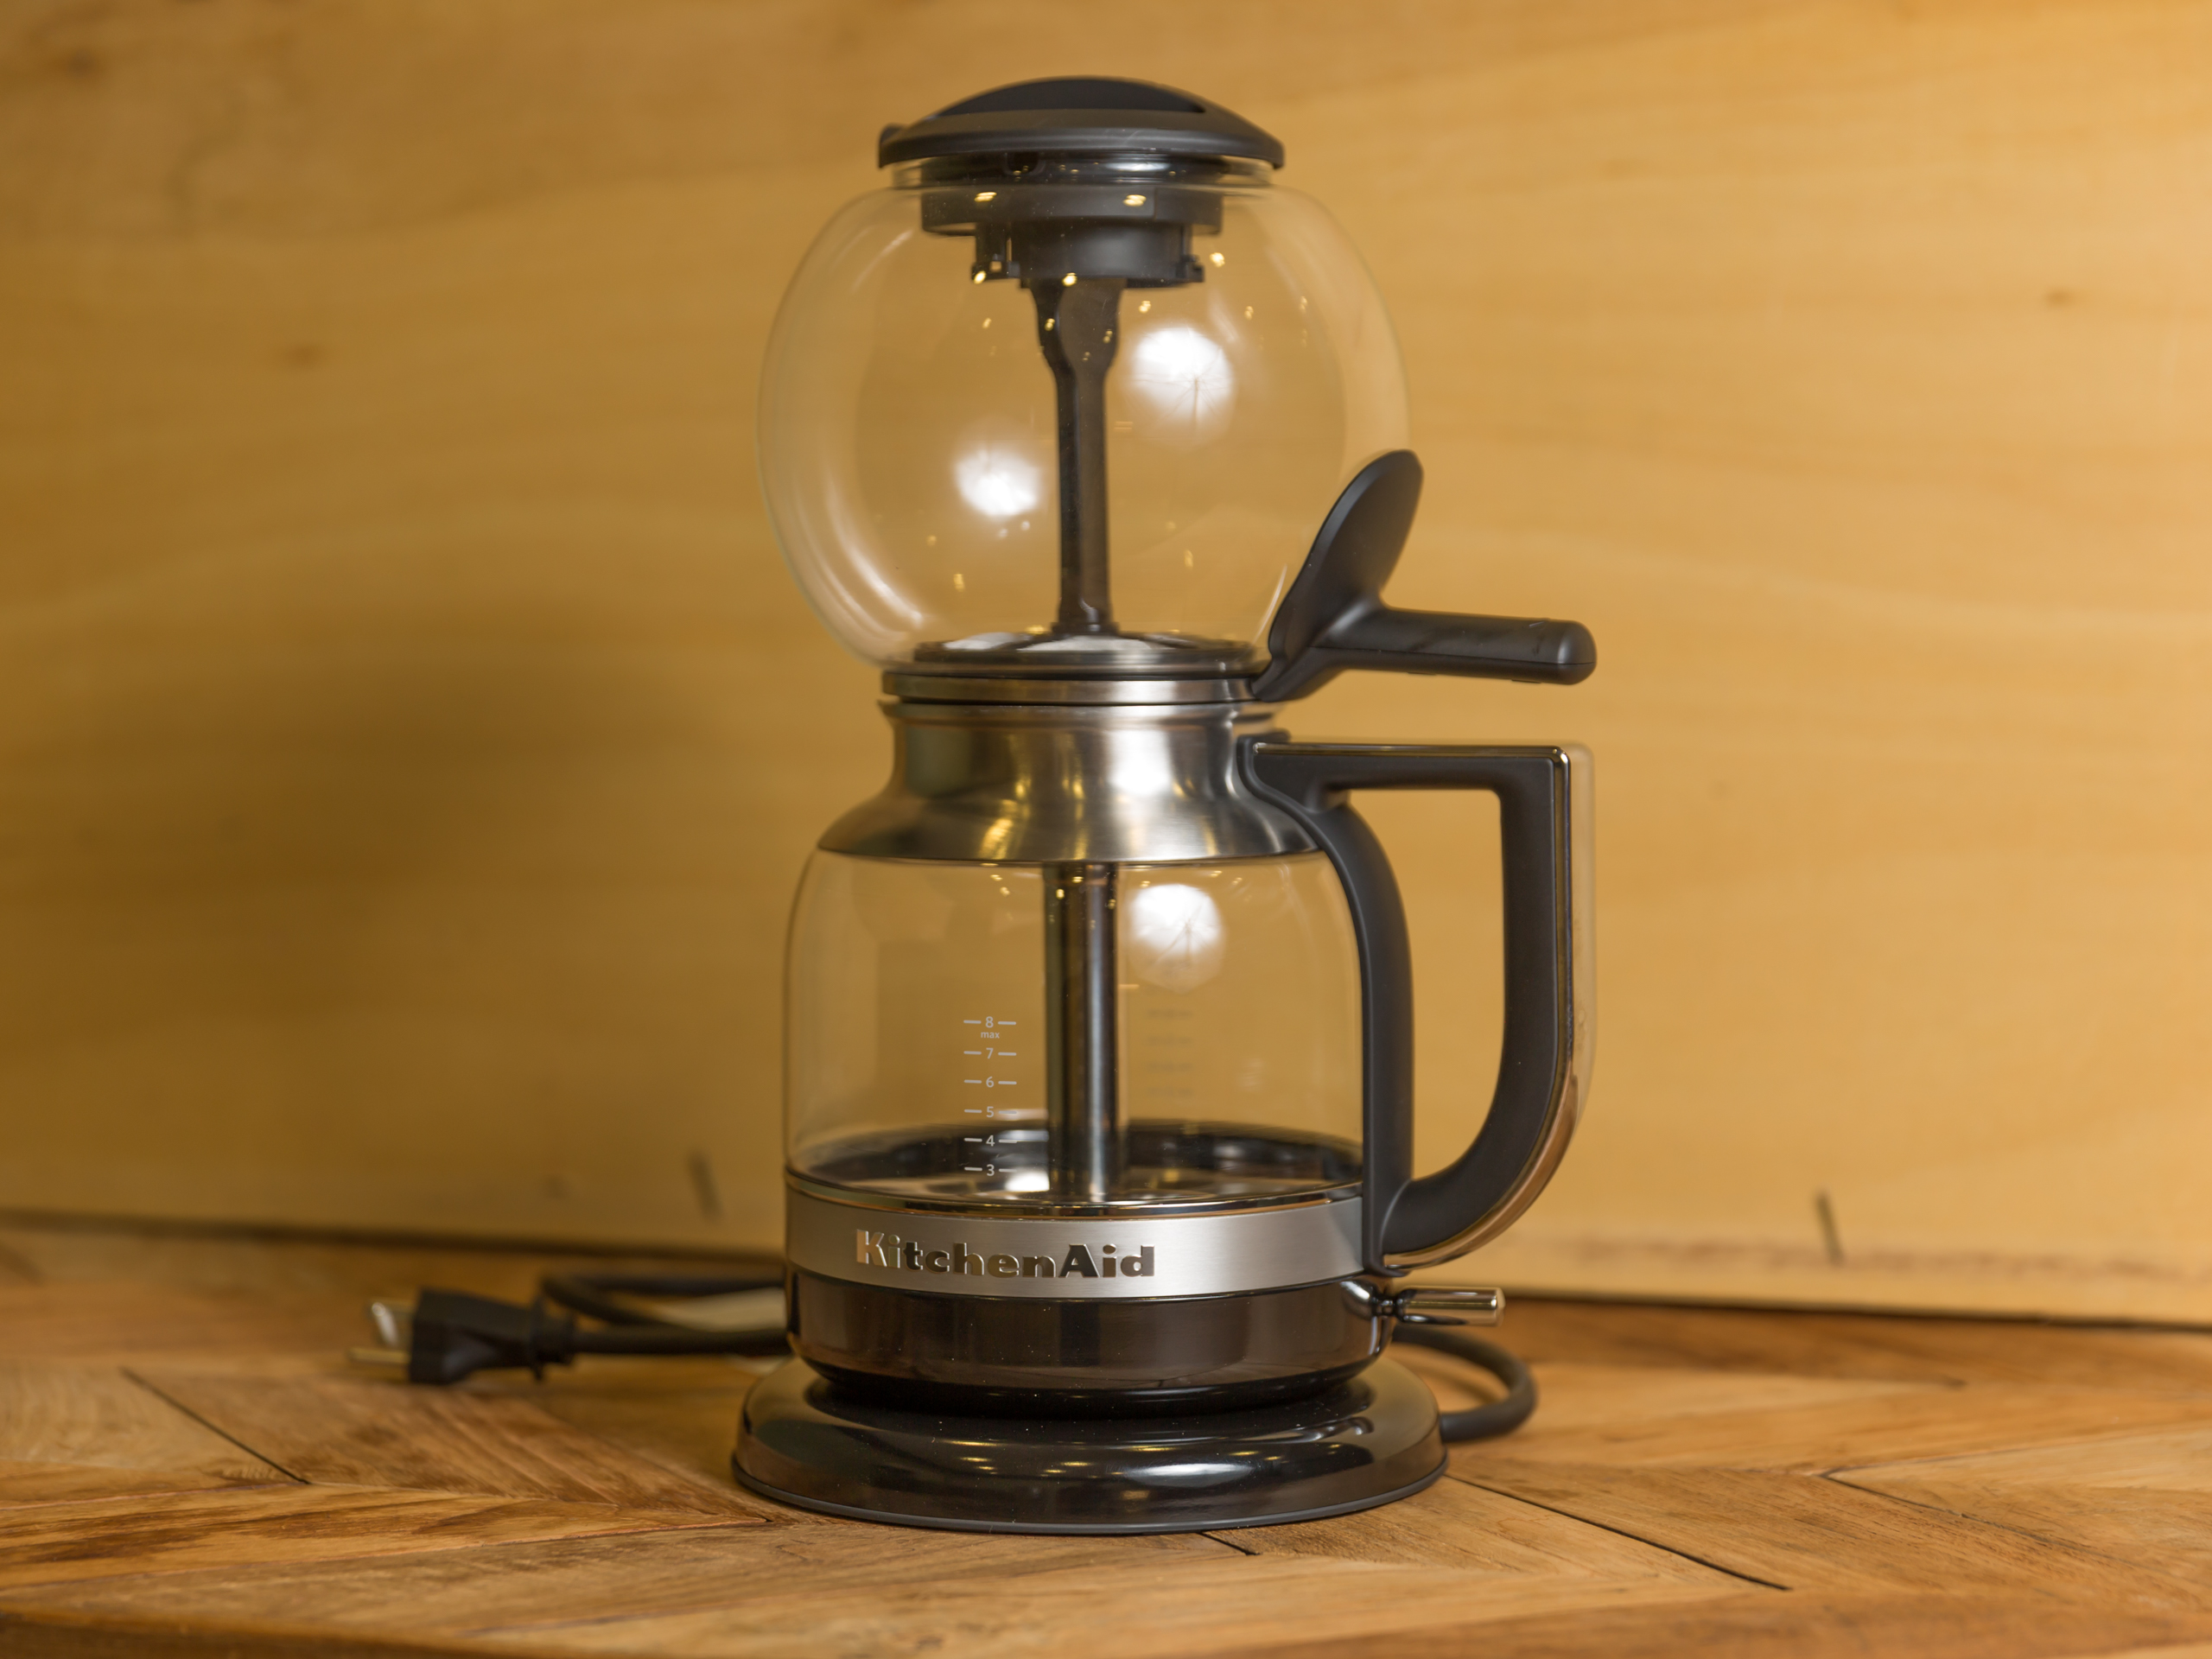 kitchenaid-siphon-coffee-maker-product-photos-23.jpg